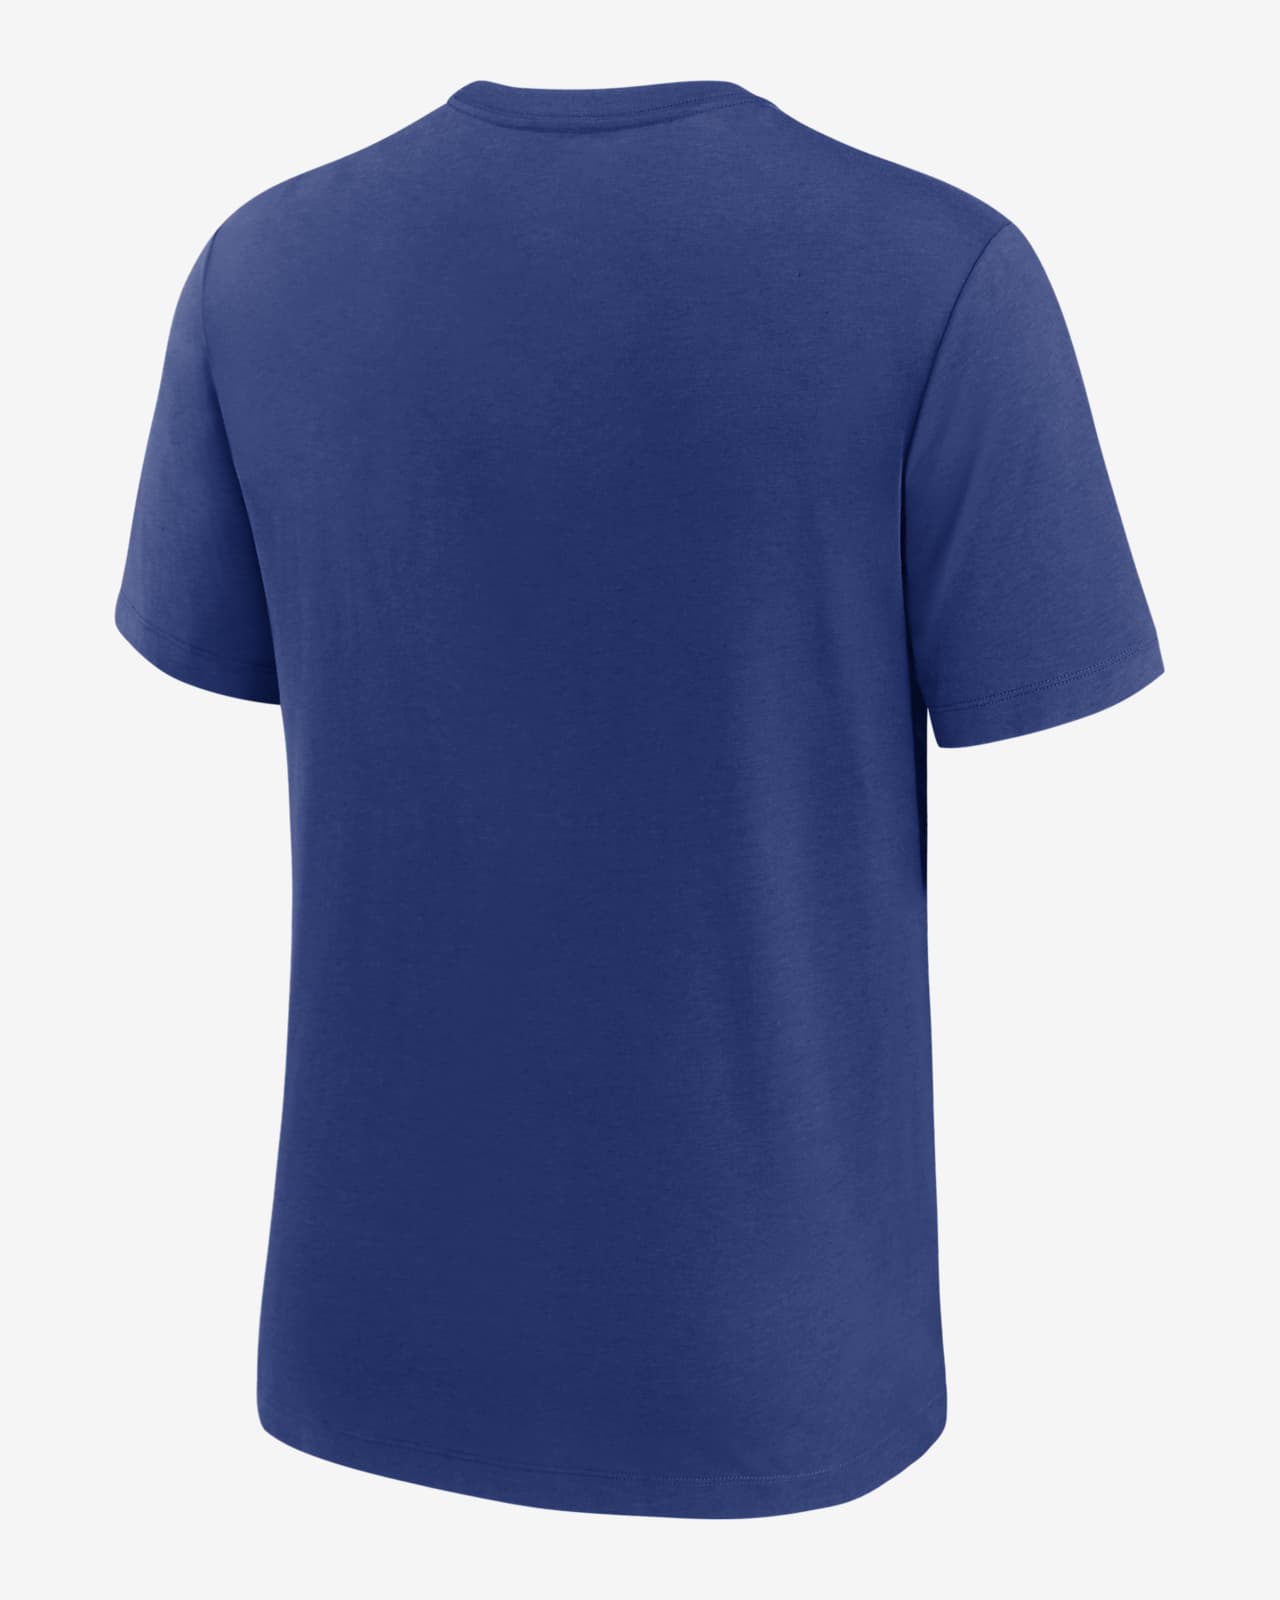 Nike Dri-Fit Men's Navy Washington Nationals Baseball Logo T-Shirt  Size Large L